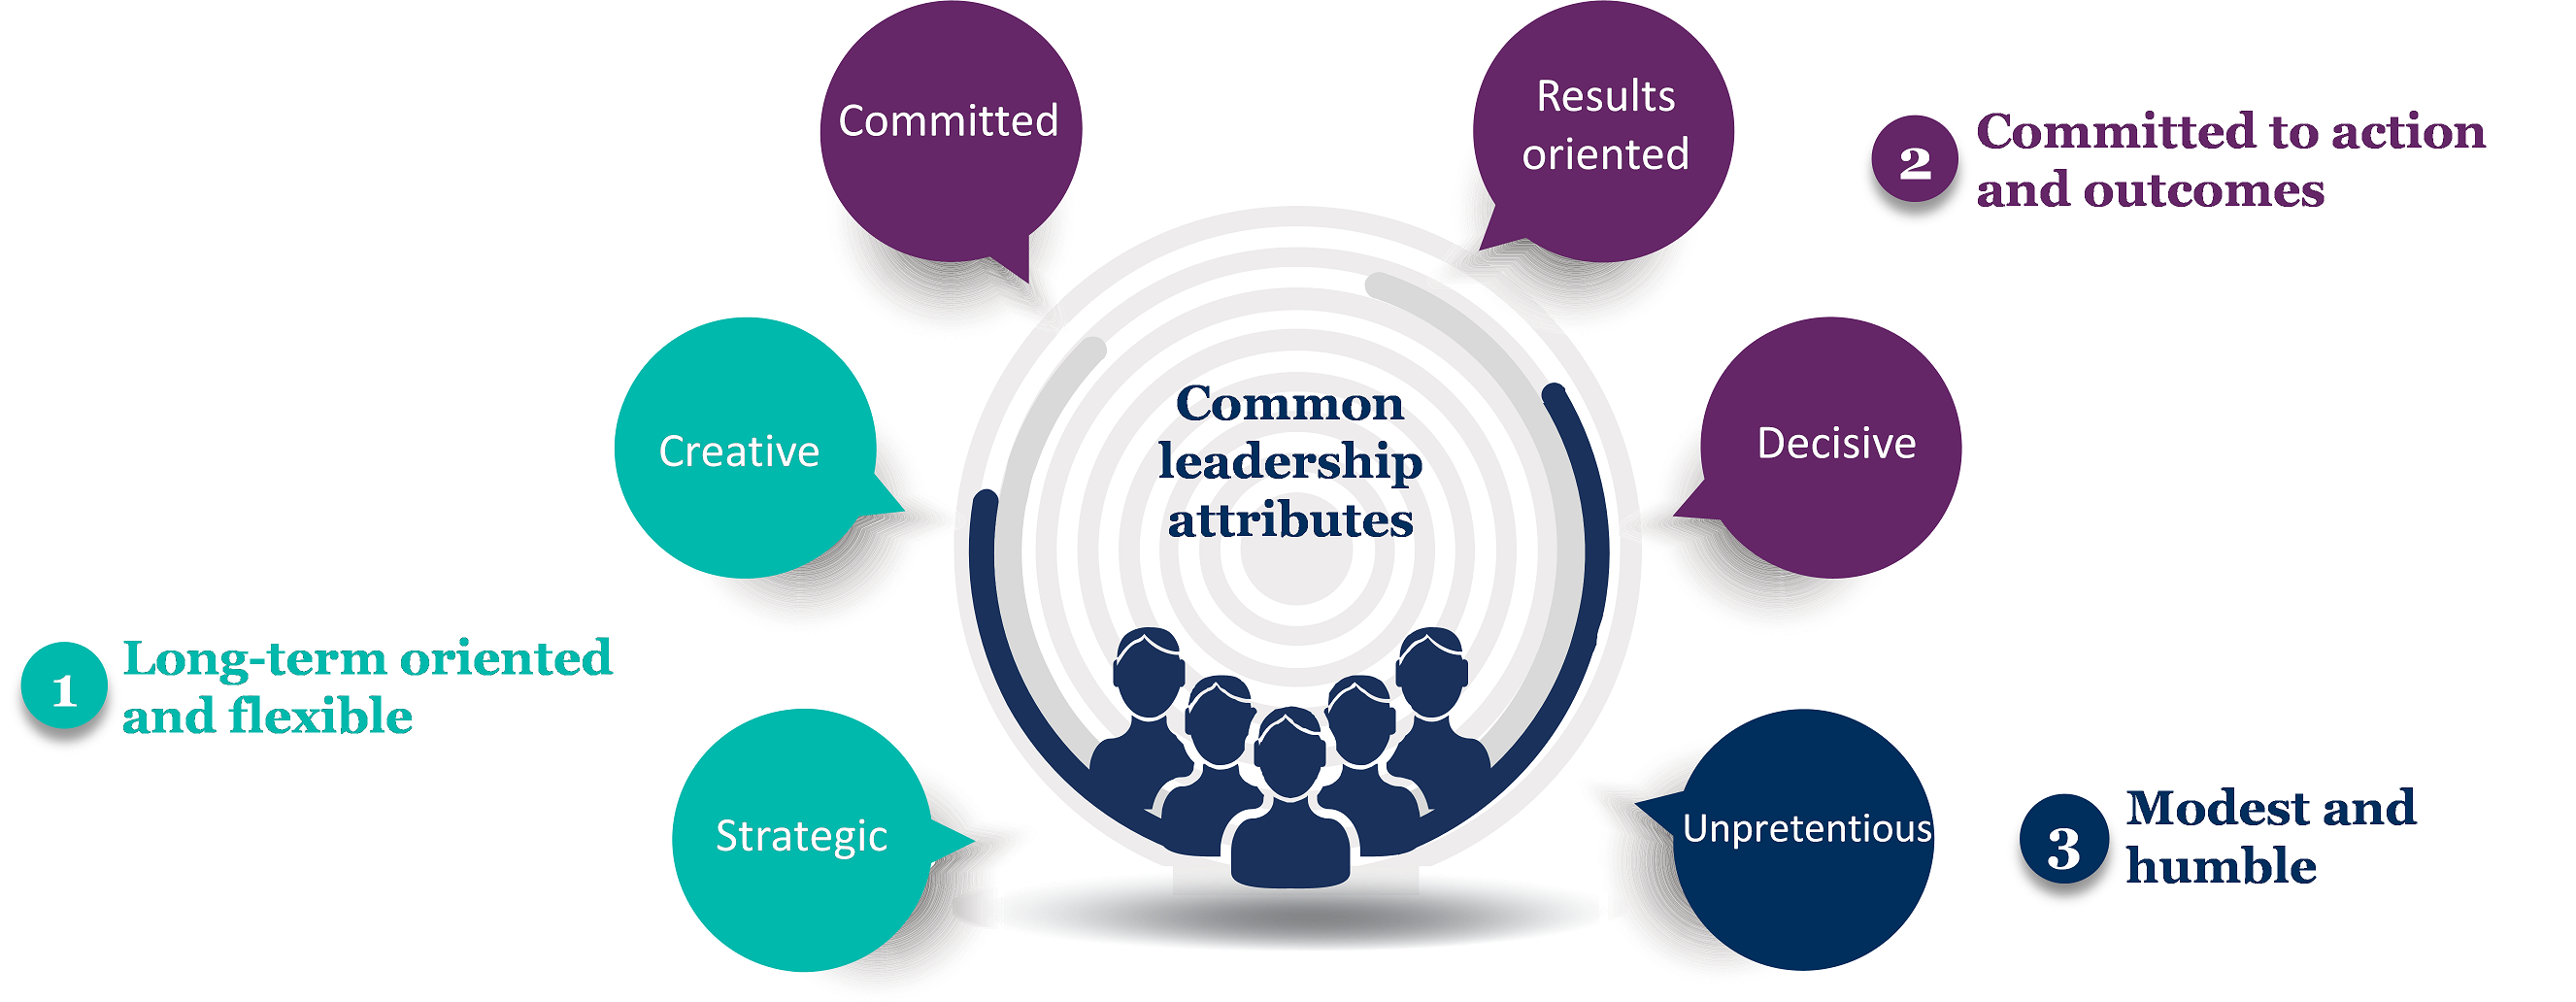 common leadership attributes